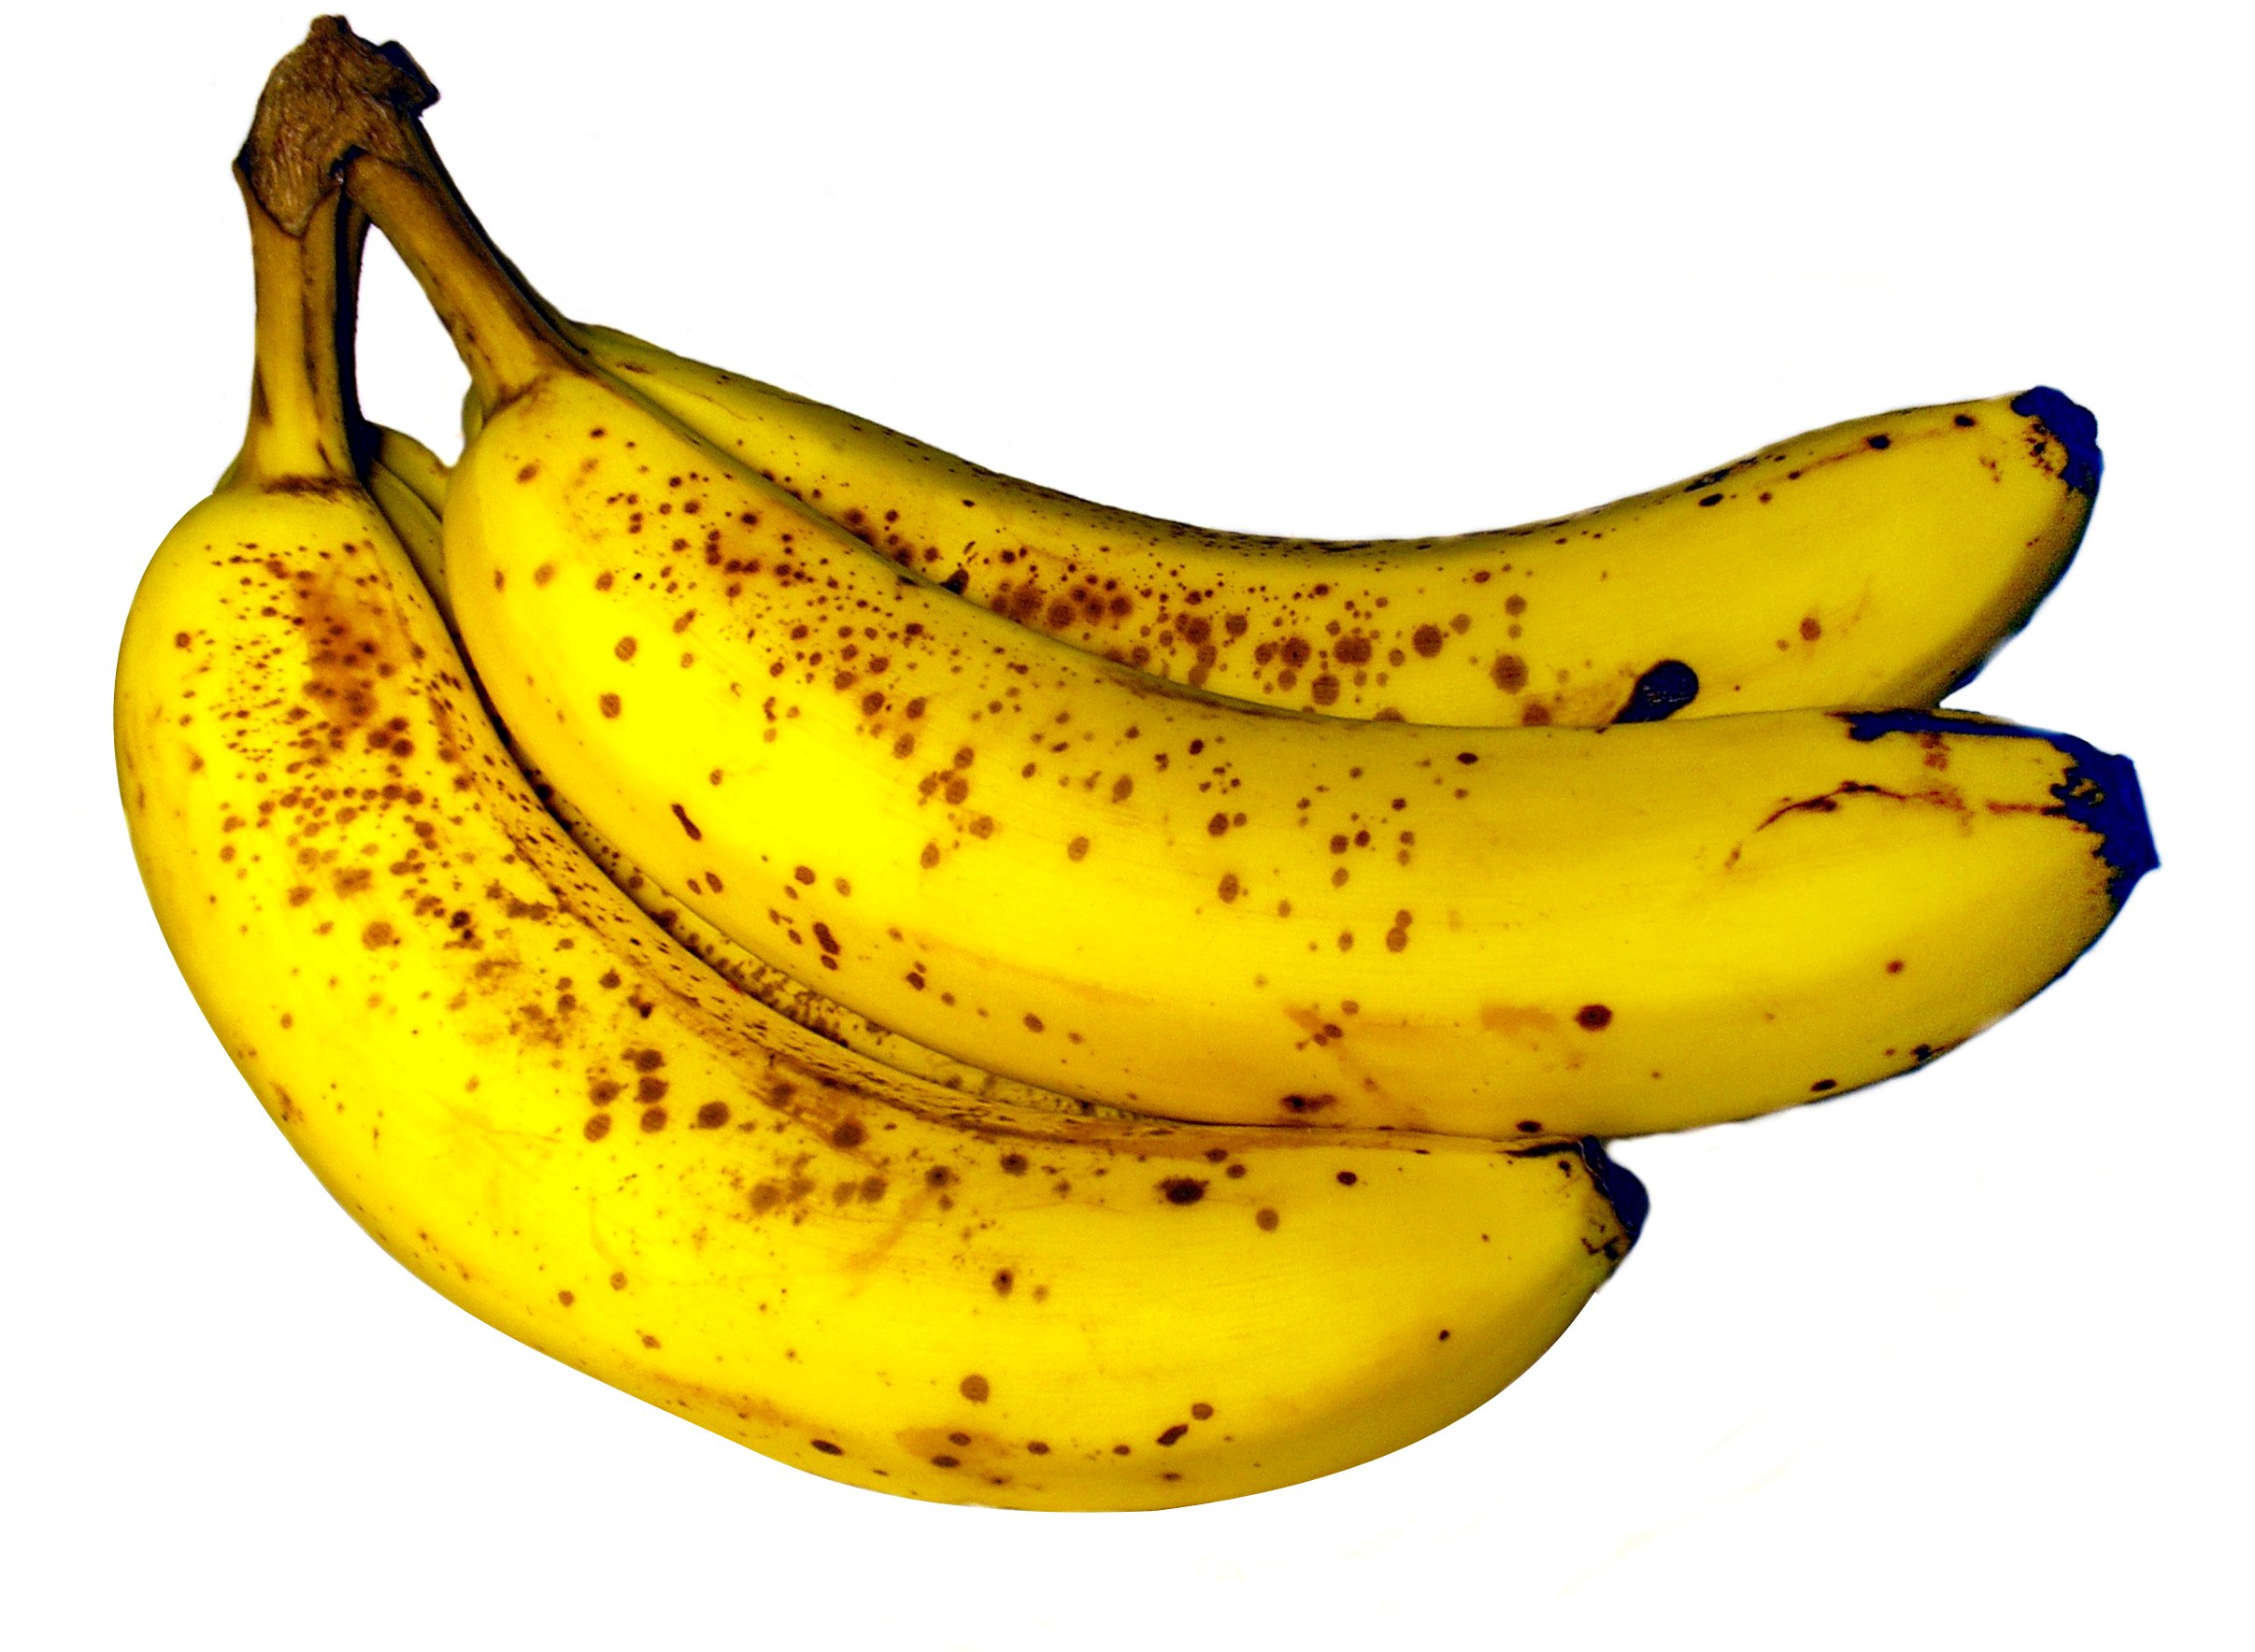 File:Banana Fruit.JPG - Wikimedia Commons